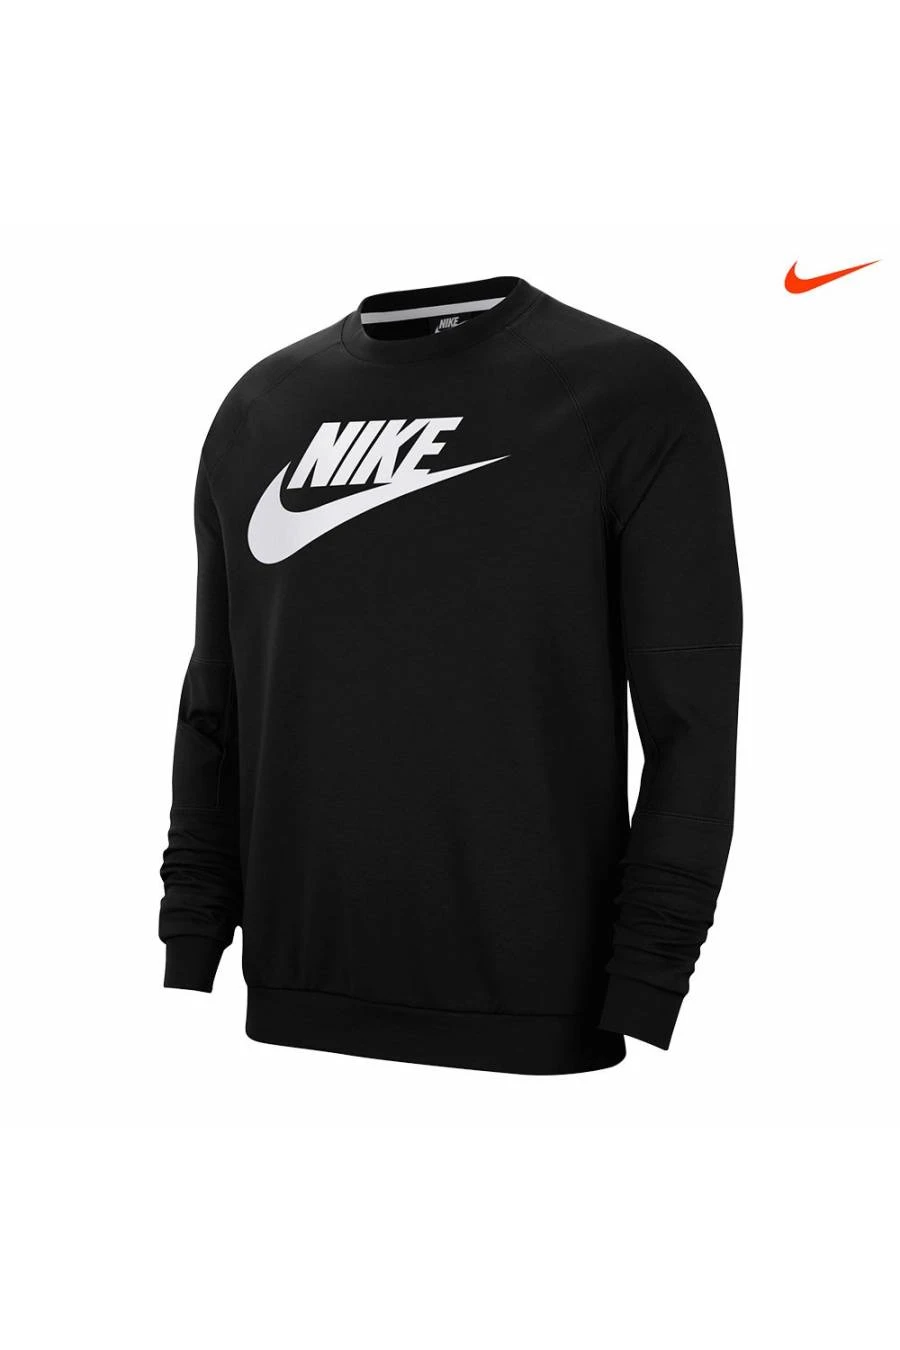 Sudadera Nike Sportswear BLACK/WHIT|Sudaderas con y sudaderas| - AliExpress